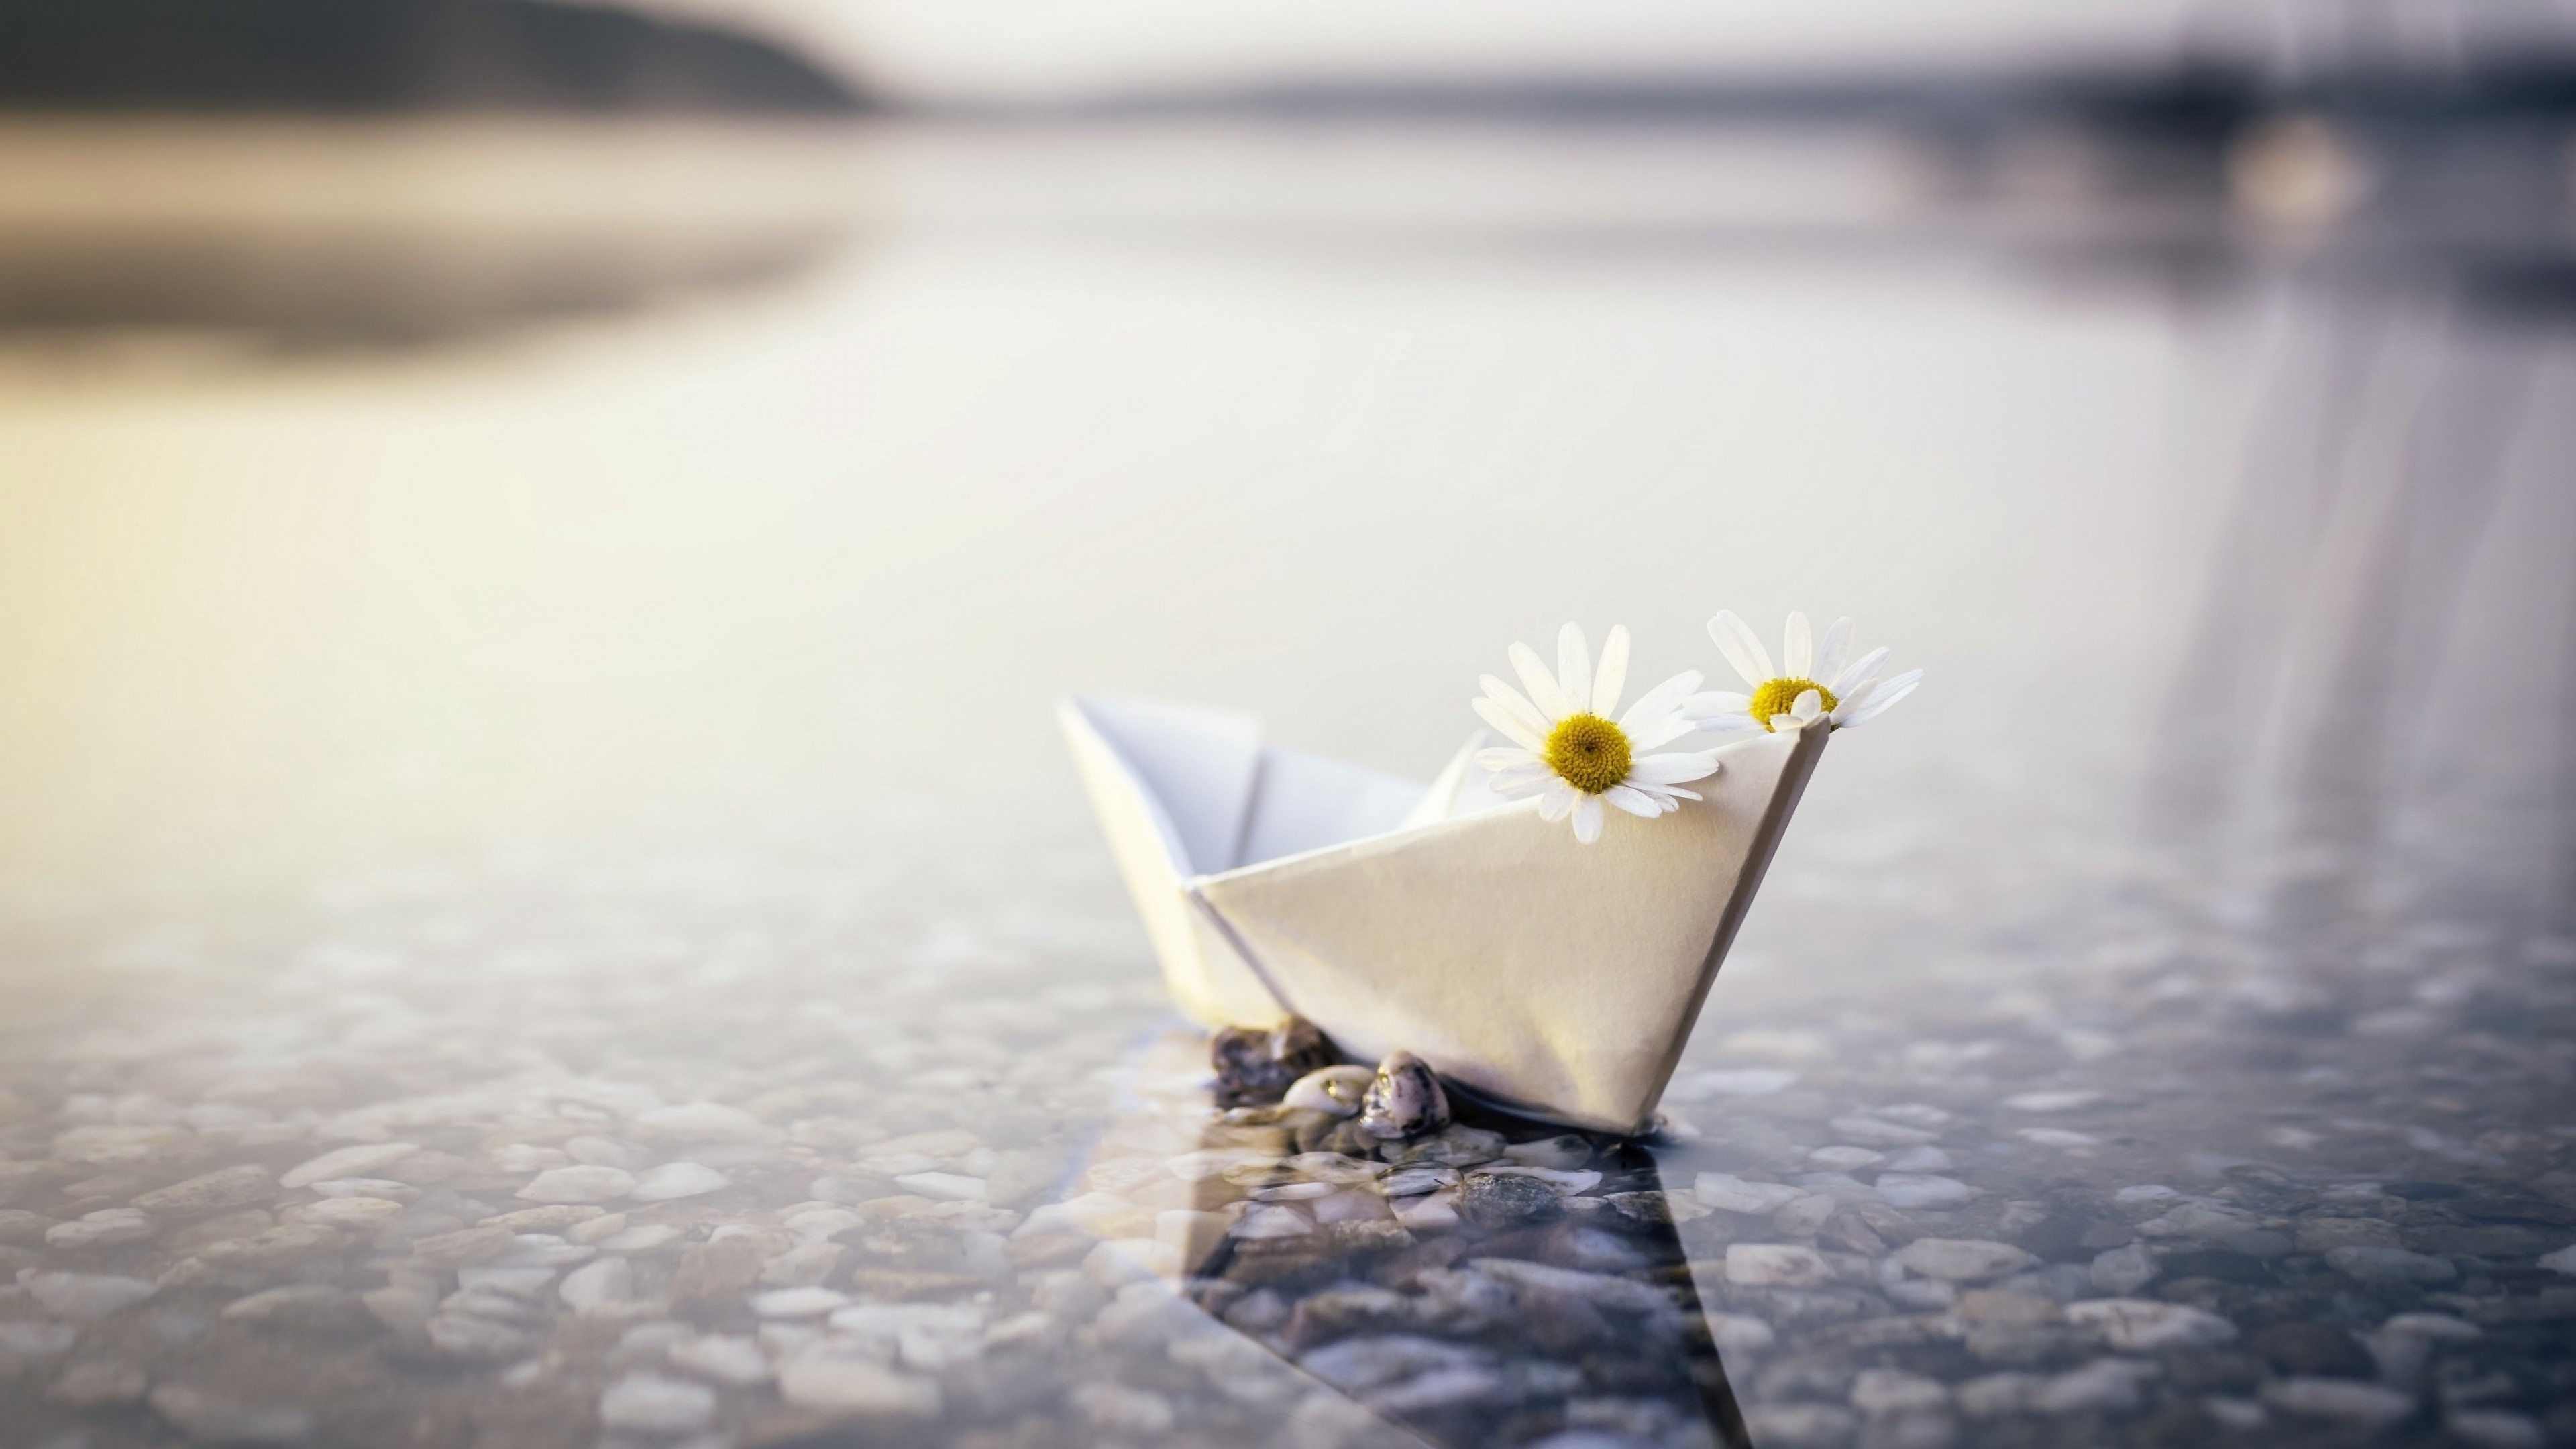 Floating paper boat, Daisy reflection, Outdoors wallpaper, 3840x2160 4K Desktop